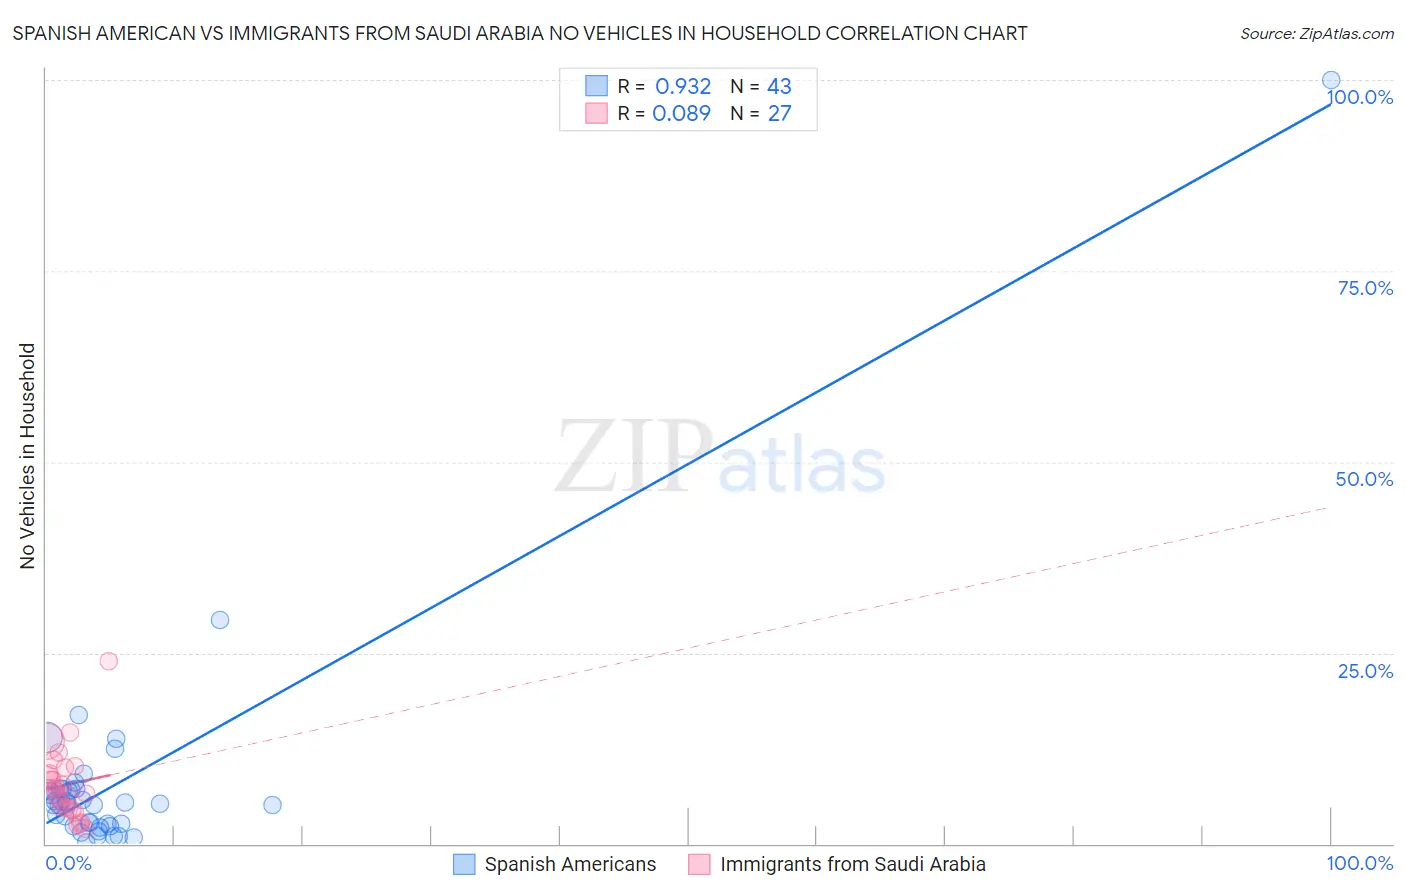 Spanish American vs Immigrants from Saudi Arabia No Vehicles in Household